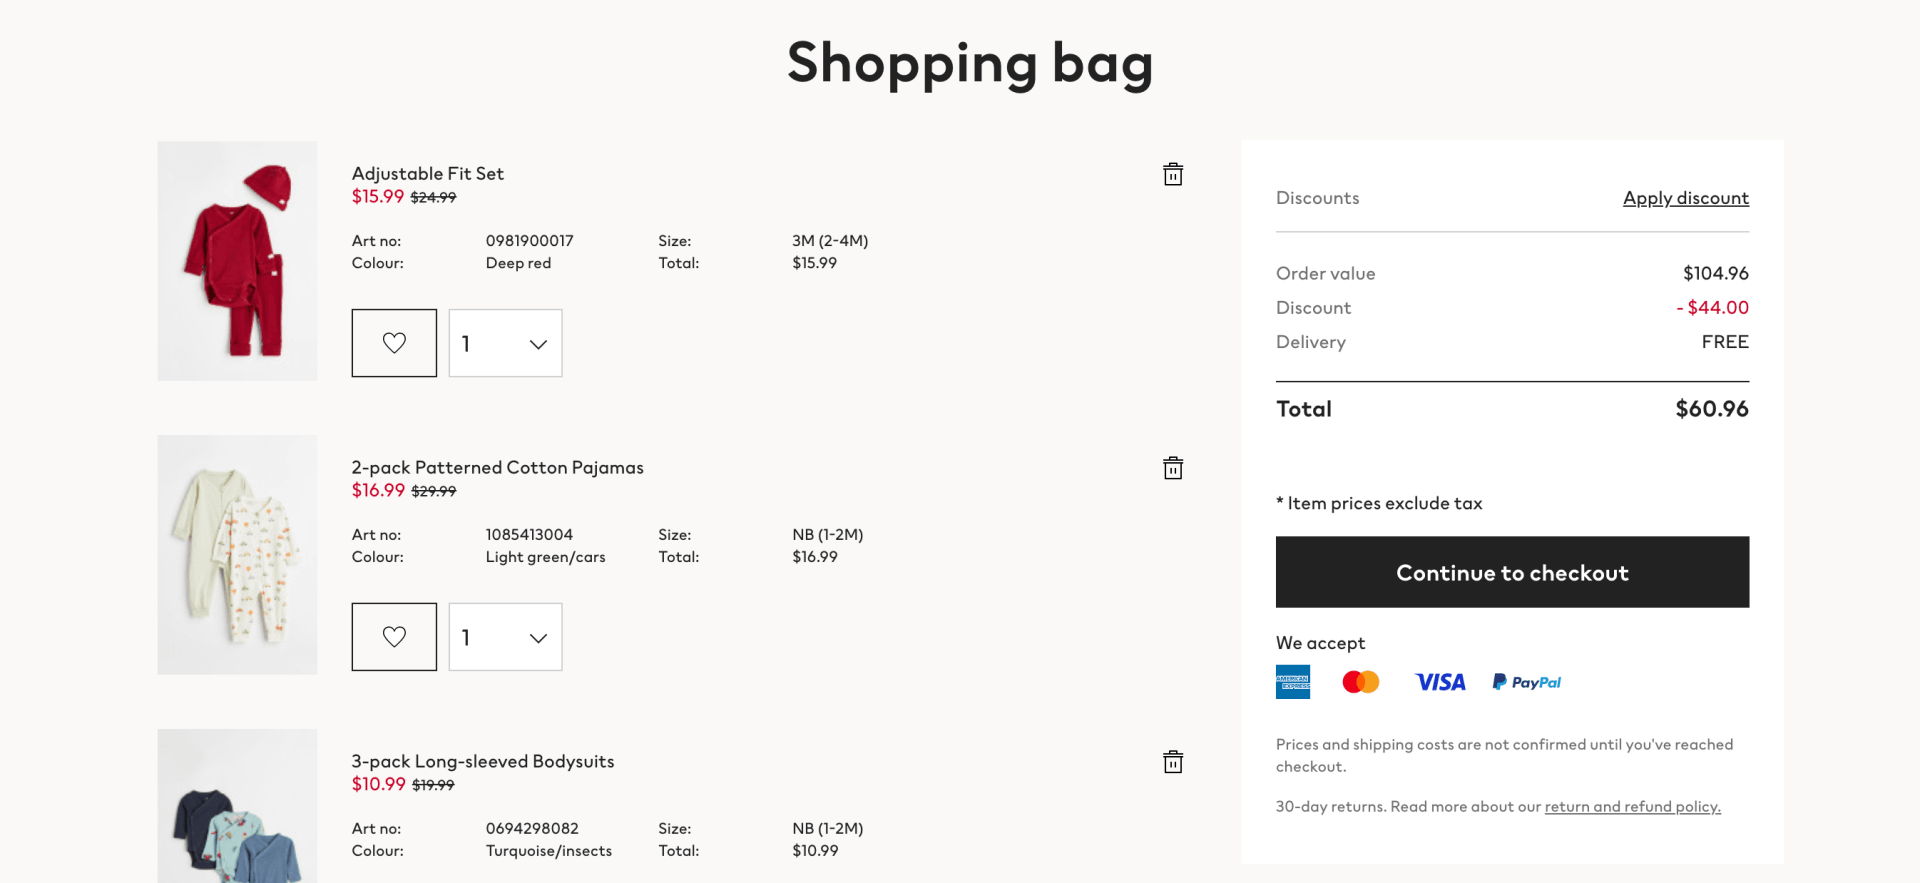 A screenshot of a shopping bag